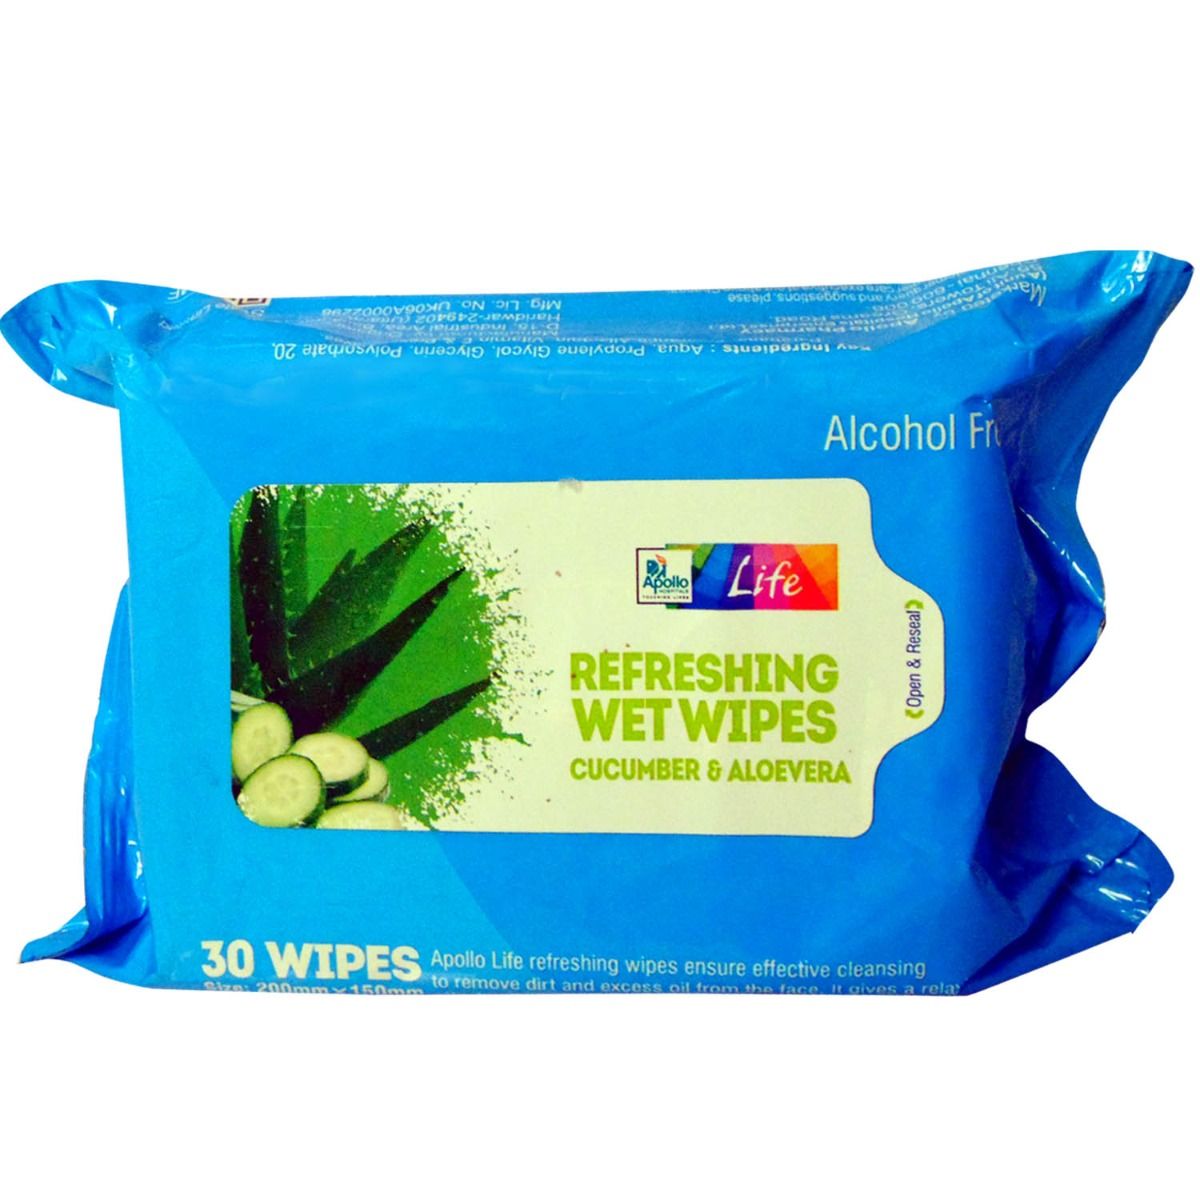 Buy Apollo Life Cucumber & Aloe Vera Refreshing Wet Wipes 30's Online